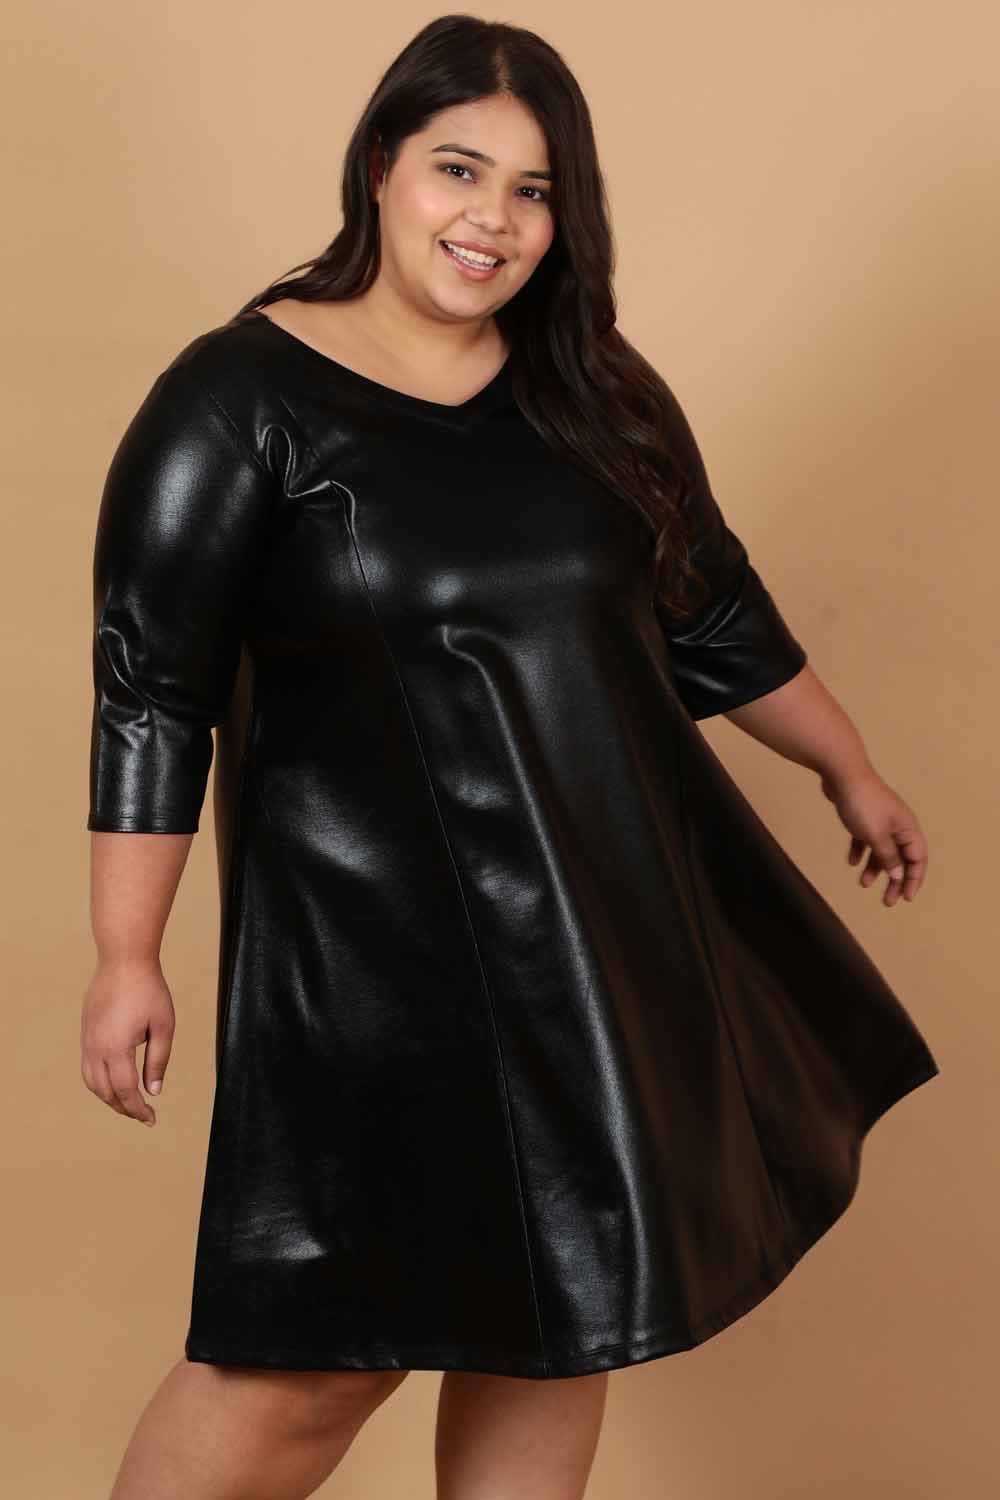 Women Leather Dresses - Buy Women Leather Dresses online in India